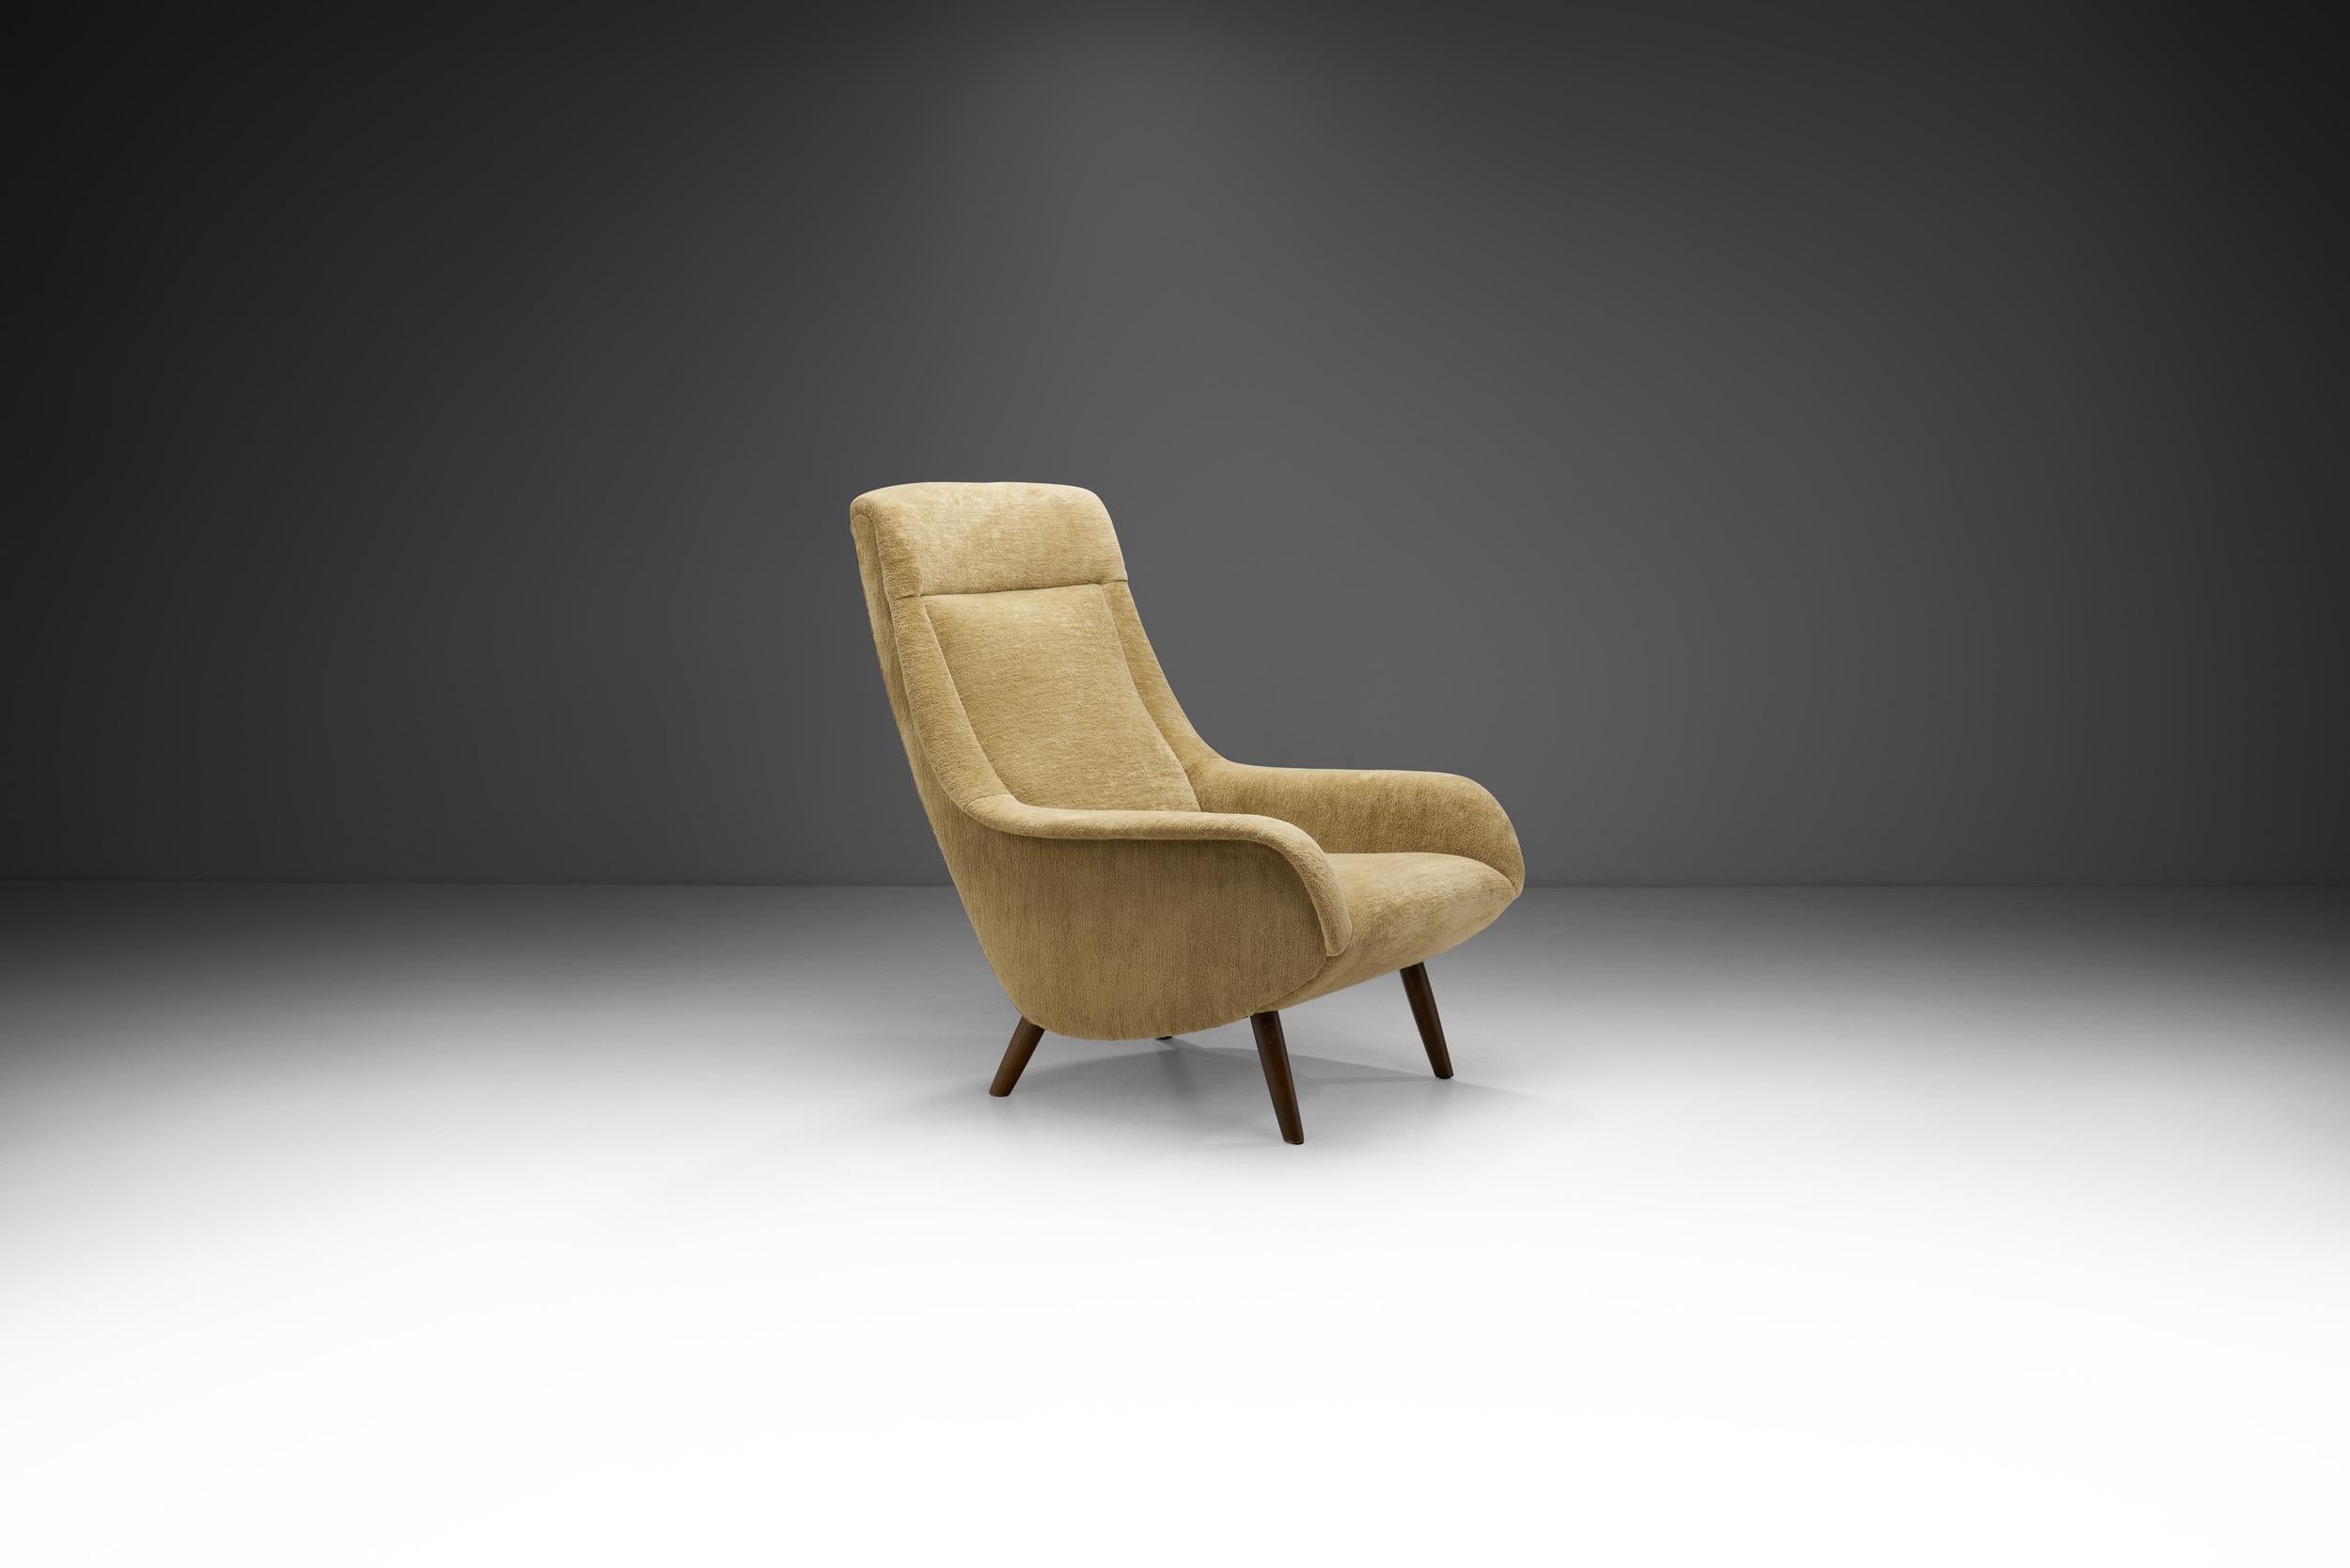 Mid-20th Century European Mid-Century Modern Lounge Chair with Beech Wood Legs, Europe 1960s